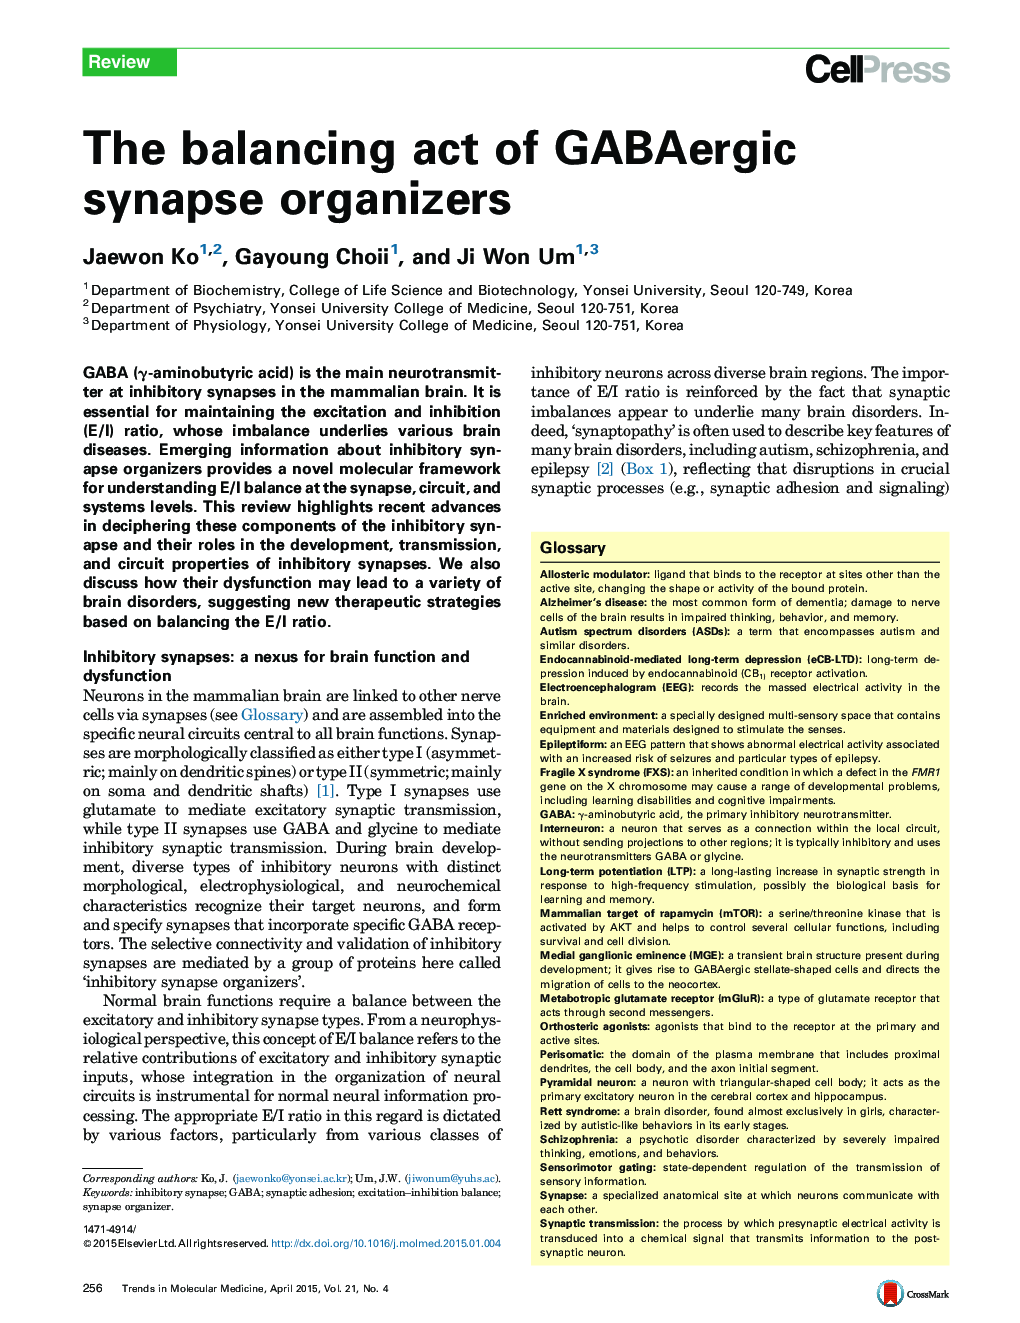 The balancing act of GABAergic synapse organizers